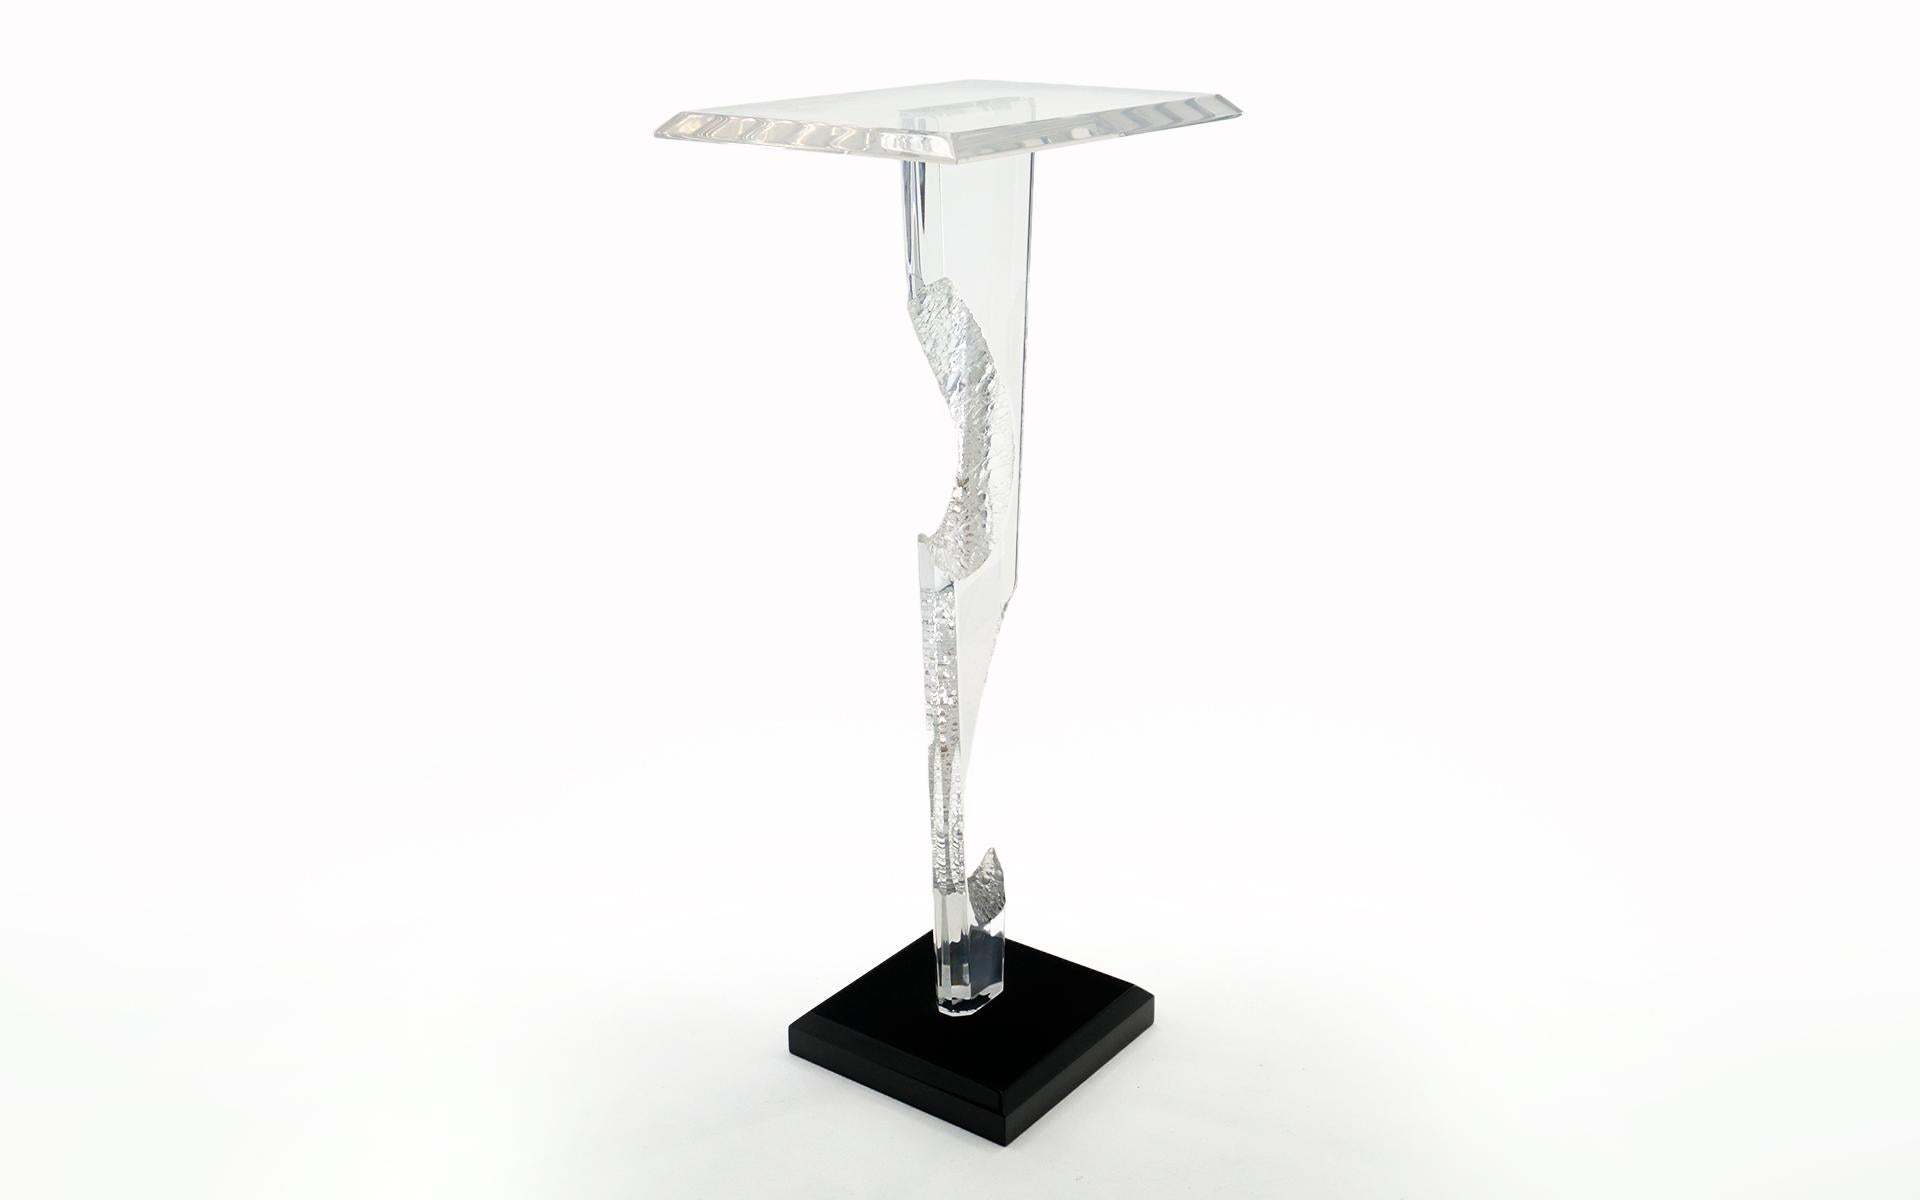 Fin du 20e siècle The Moderns / Contemporary Pedestal Display Stand, Clear & Black Lucite/ Acrylic (en anglais) en vente